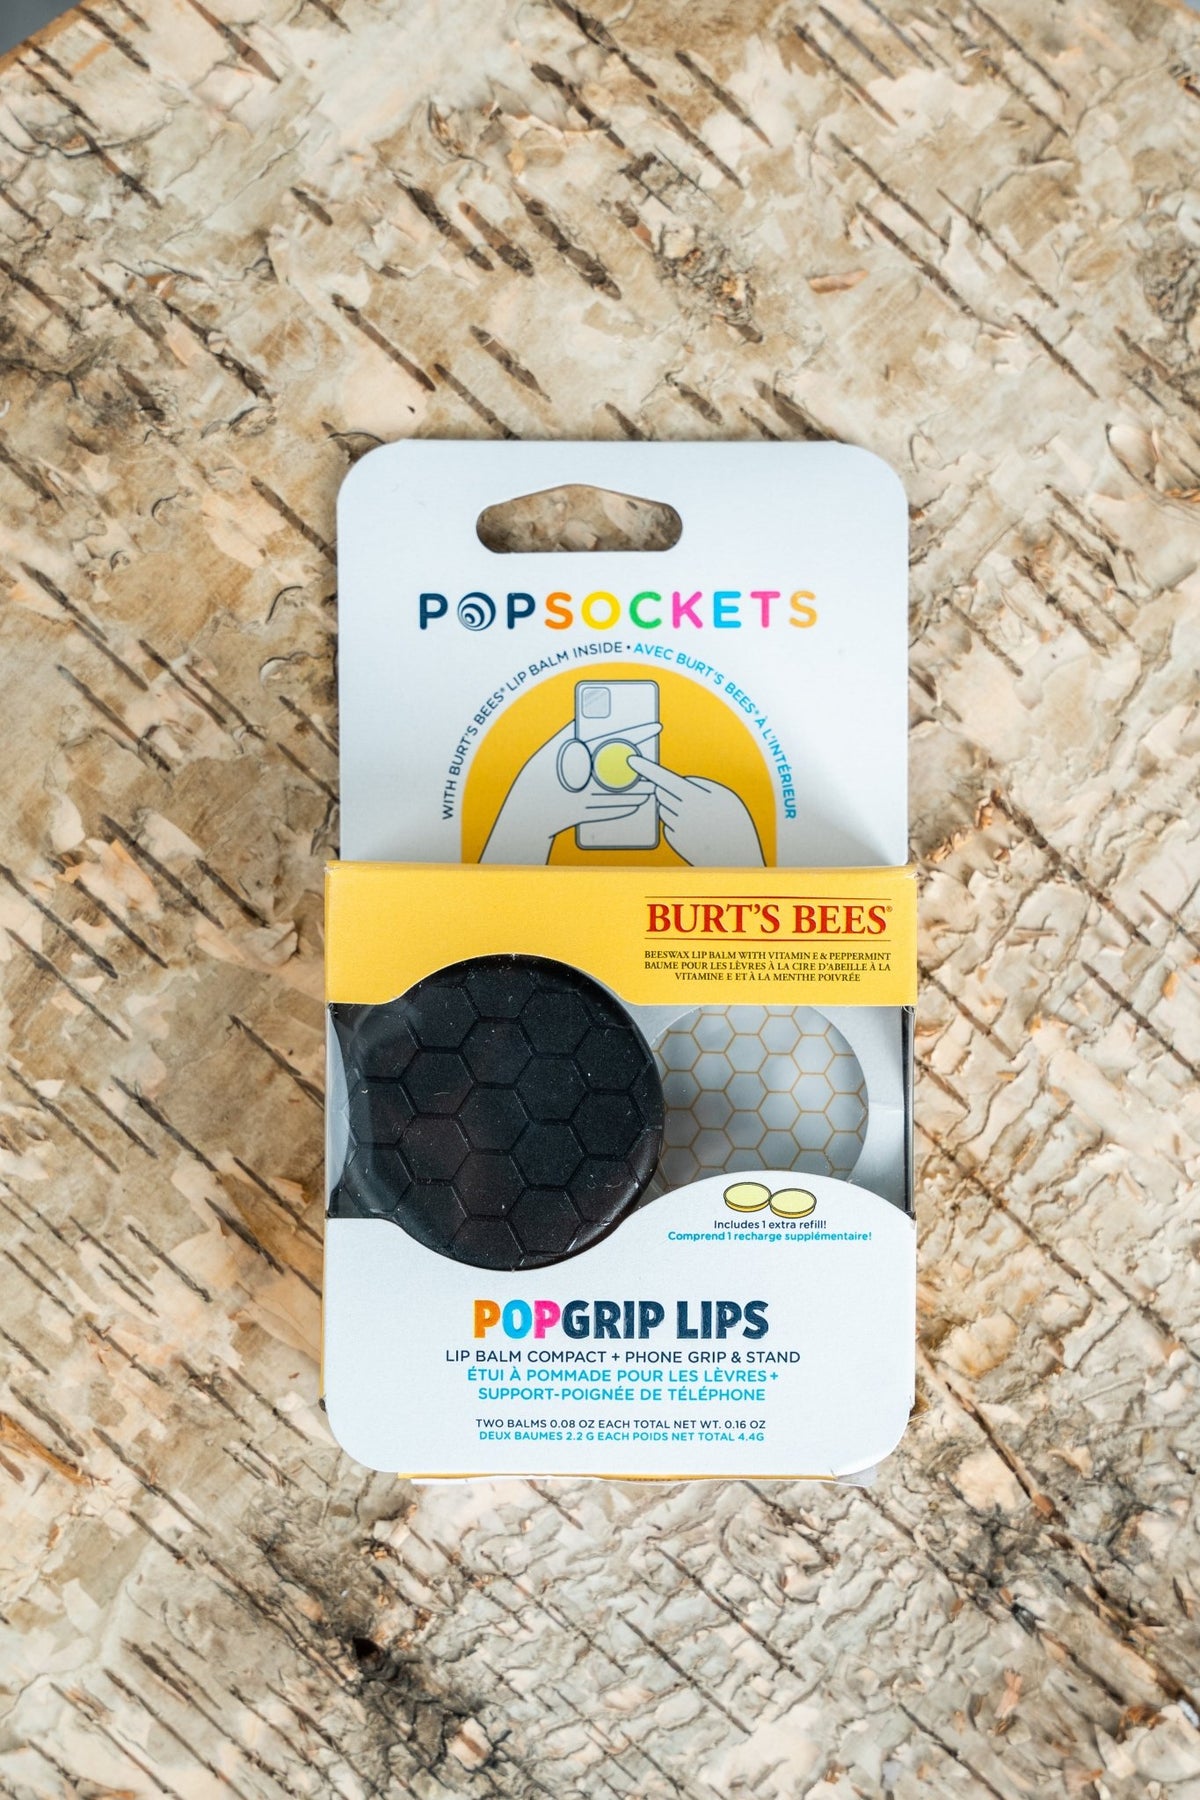 PopSockets Burt's Bees PopSocket night hive - Cute Pop Socket - Trendy PopSockets at Lush Fashion Lounge Boutique in Oklahoma City